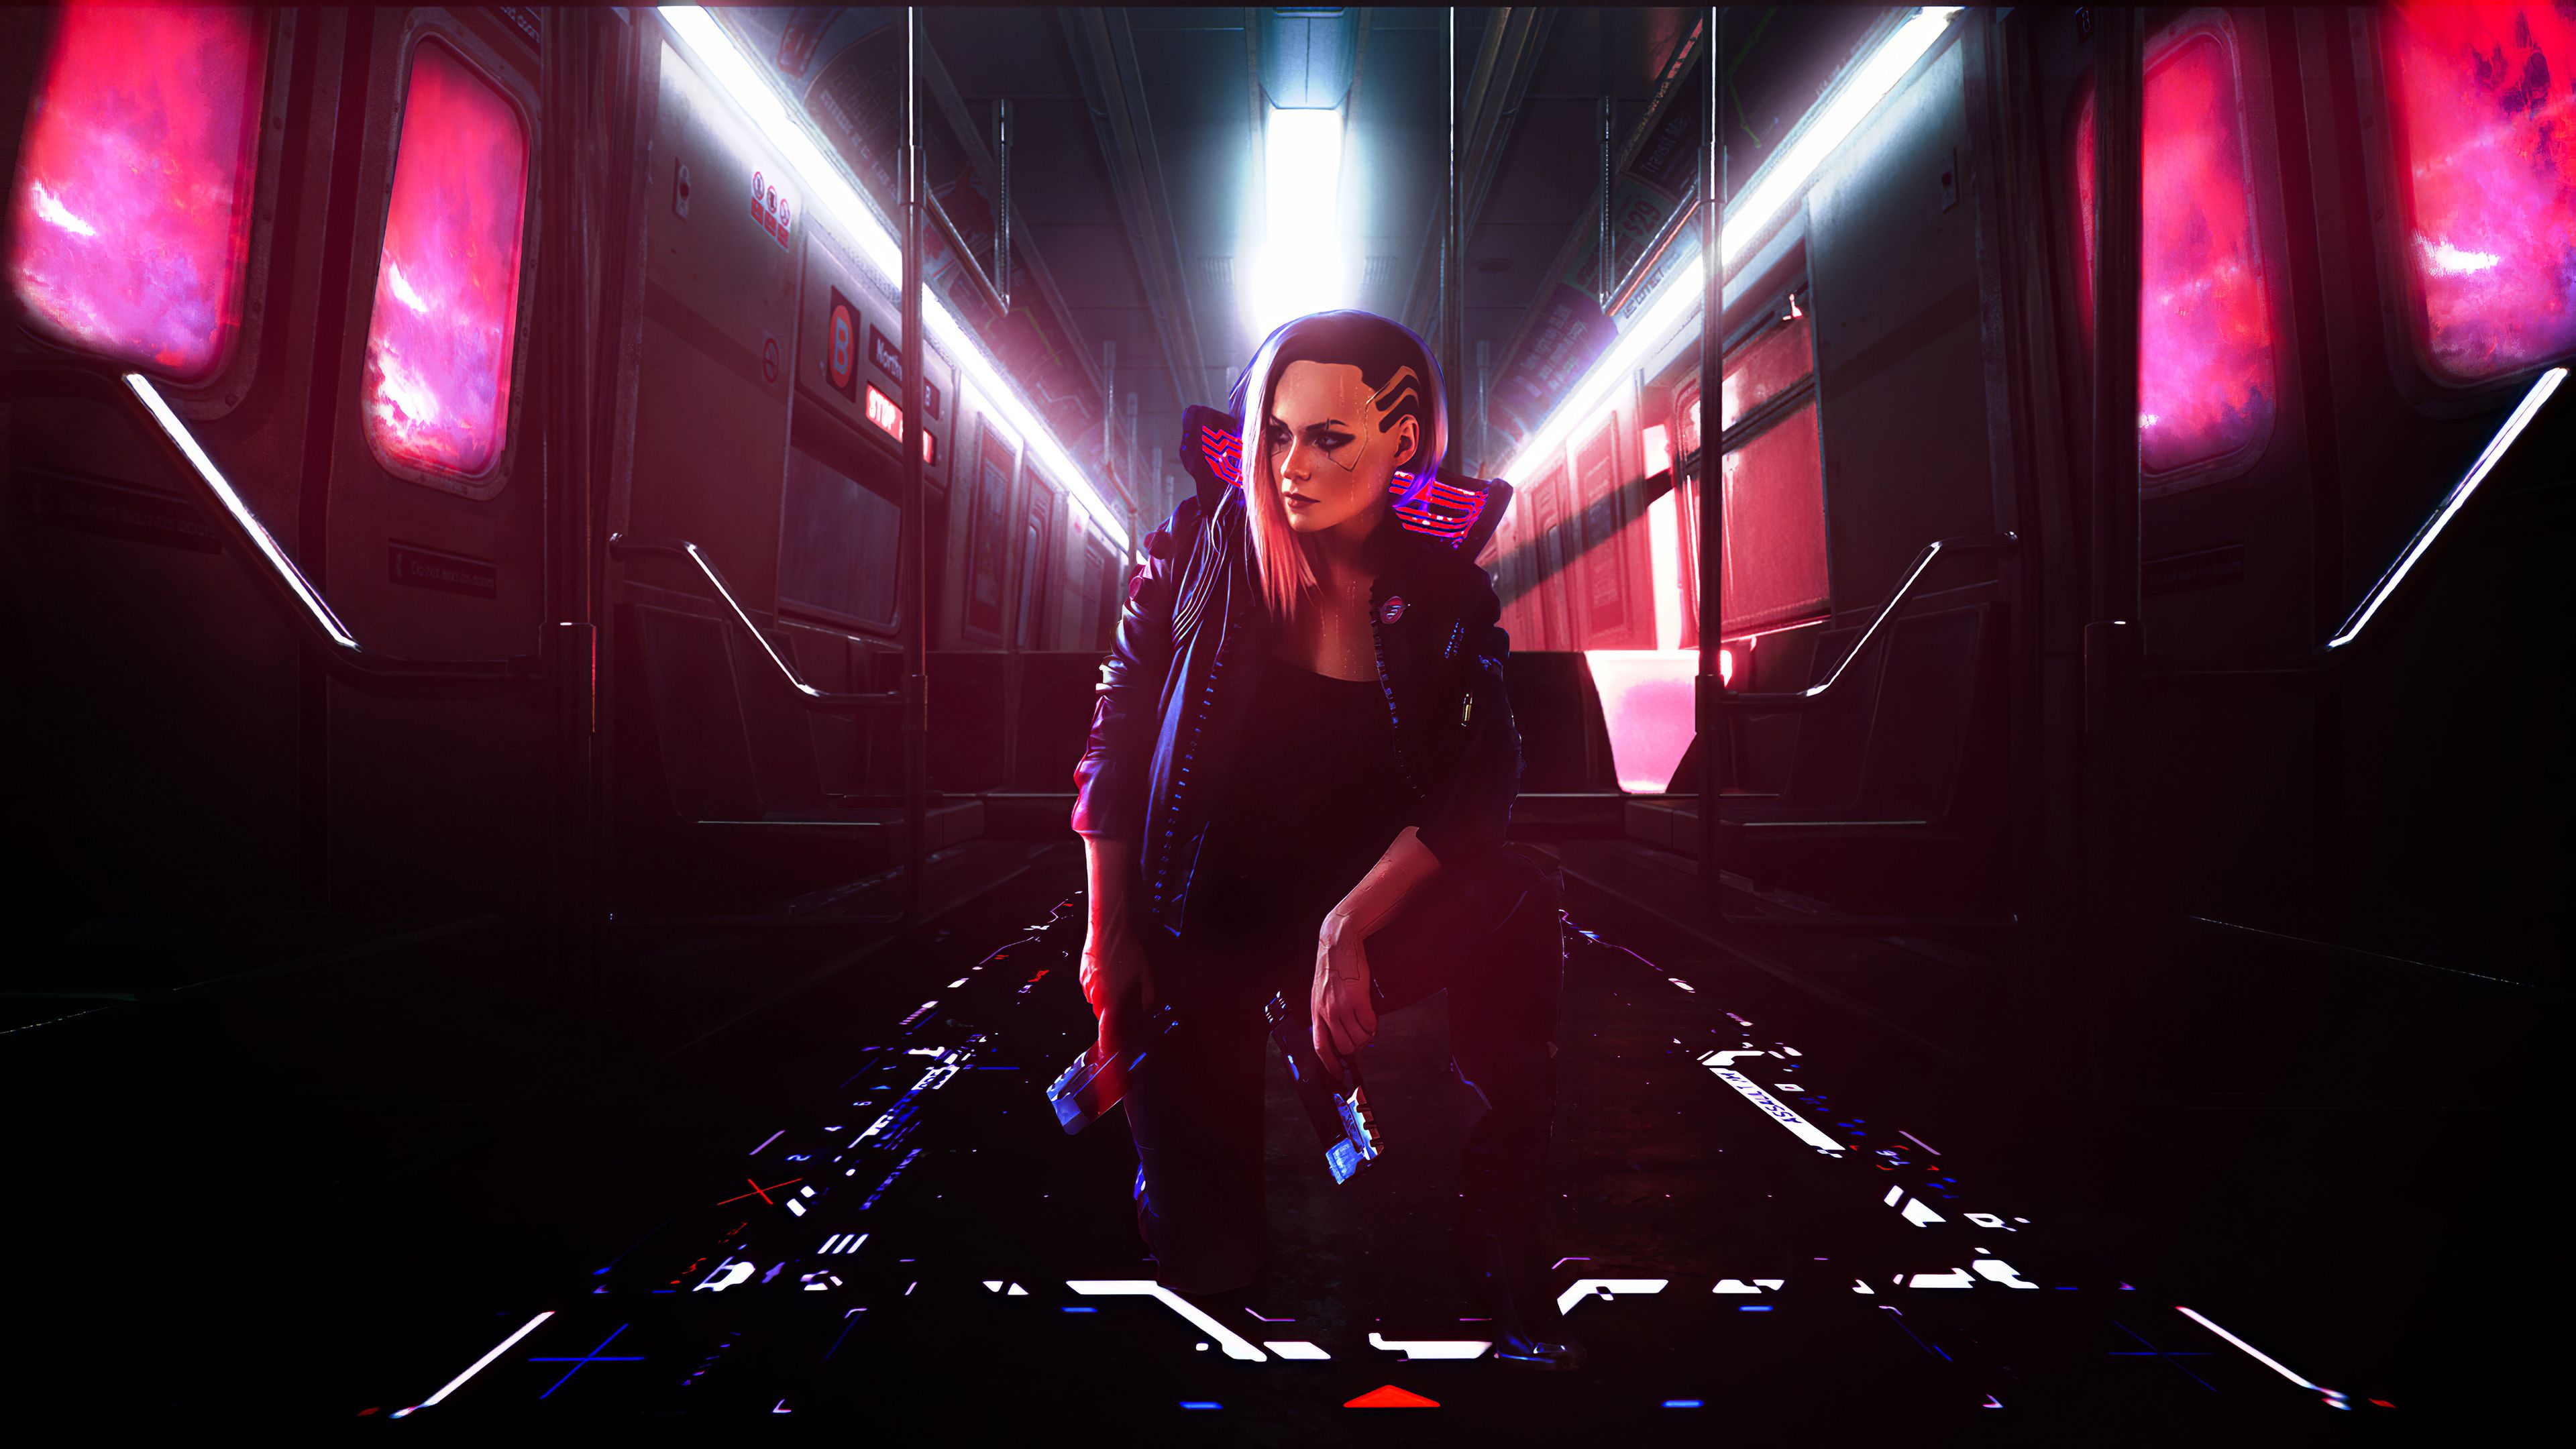 Female V 4K Wallpaper, Cyberpunk Cyberpunk girl, Xbox Series X, Xbox One, PlayStation Games